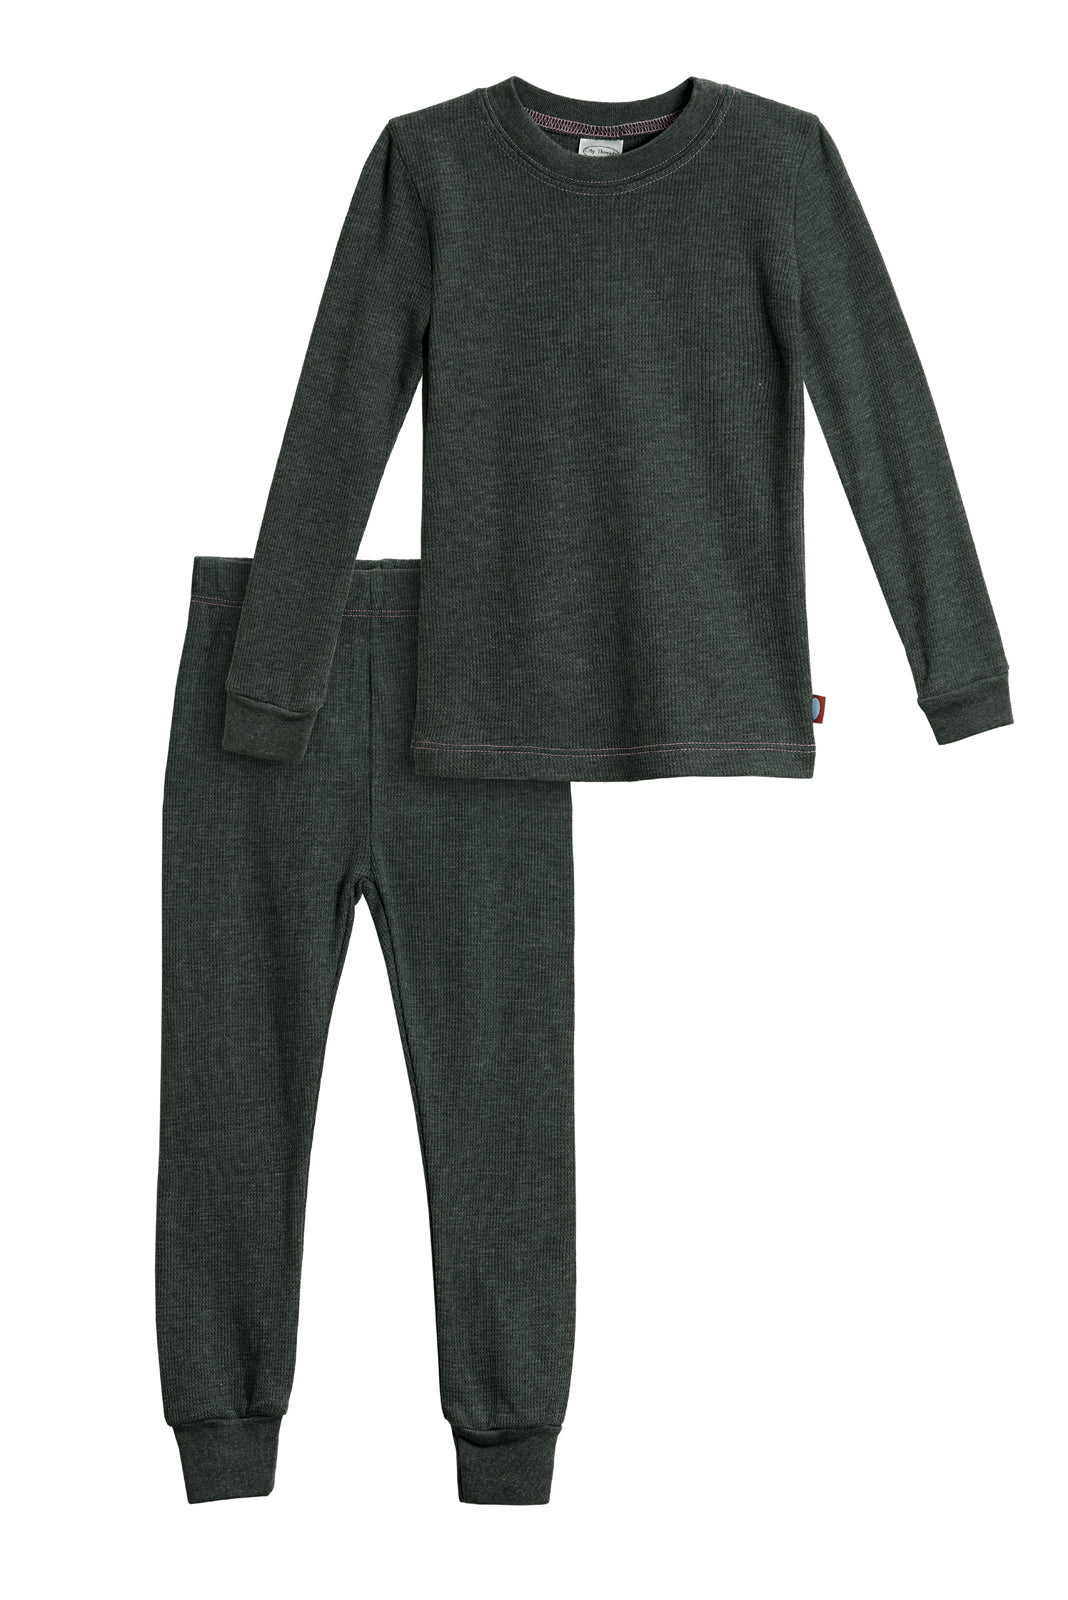 Women's Cotton Waffle Knit Thermal Underwear Stretch Shirt & Pants 2pc Set  (XL, Black)